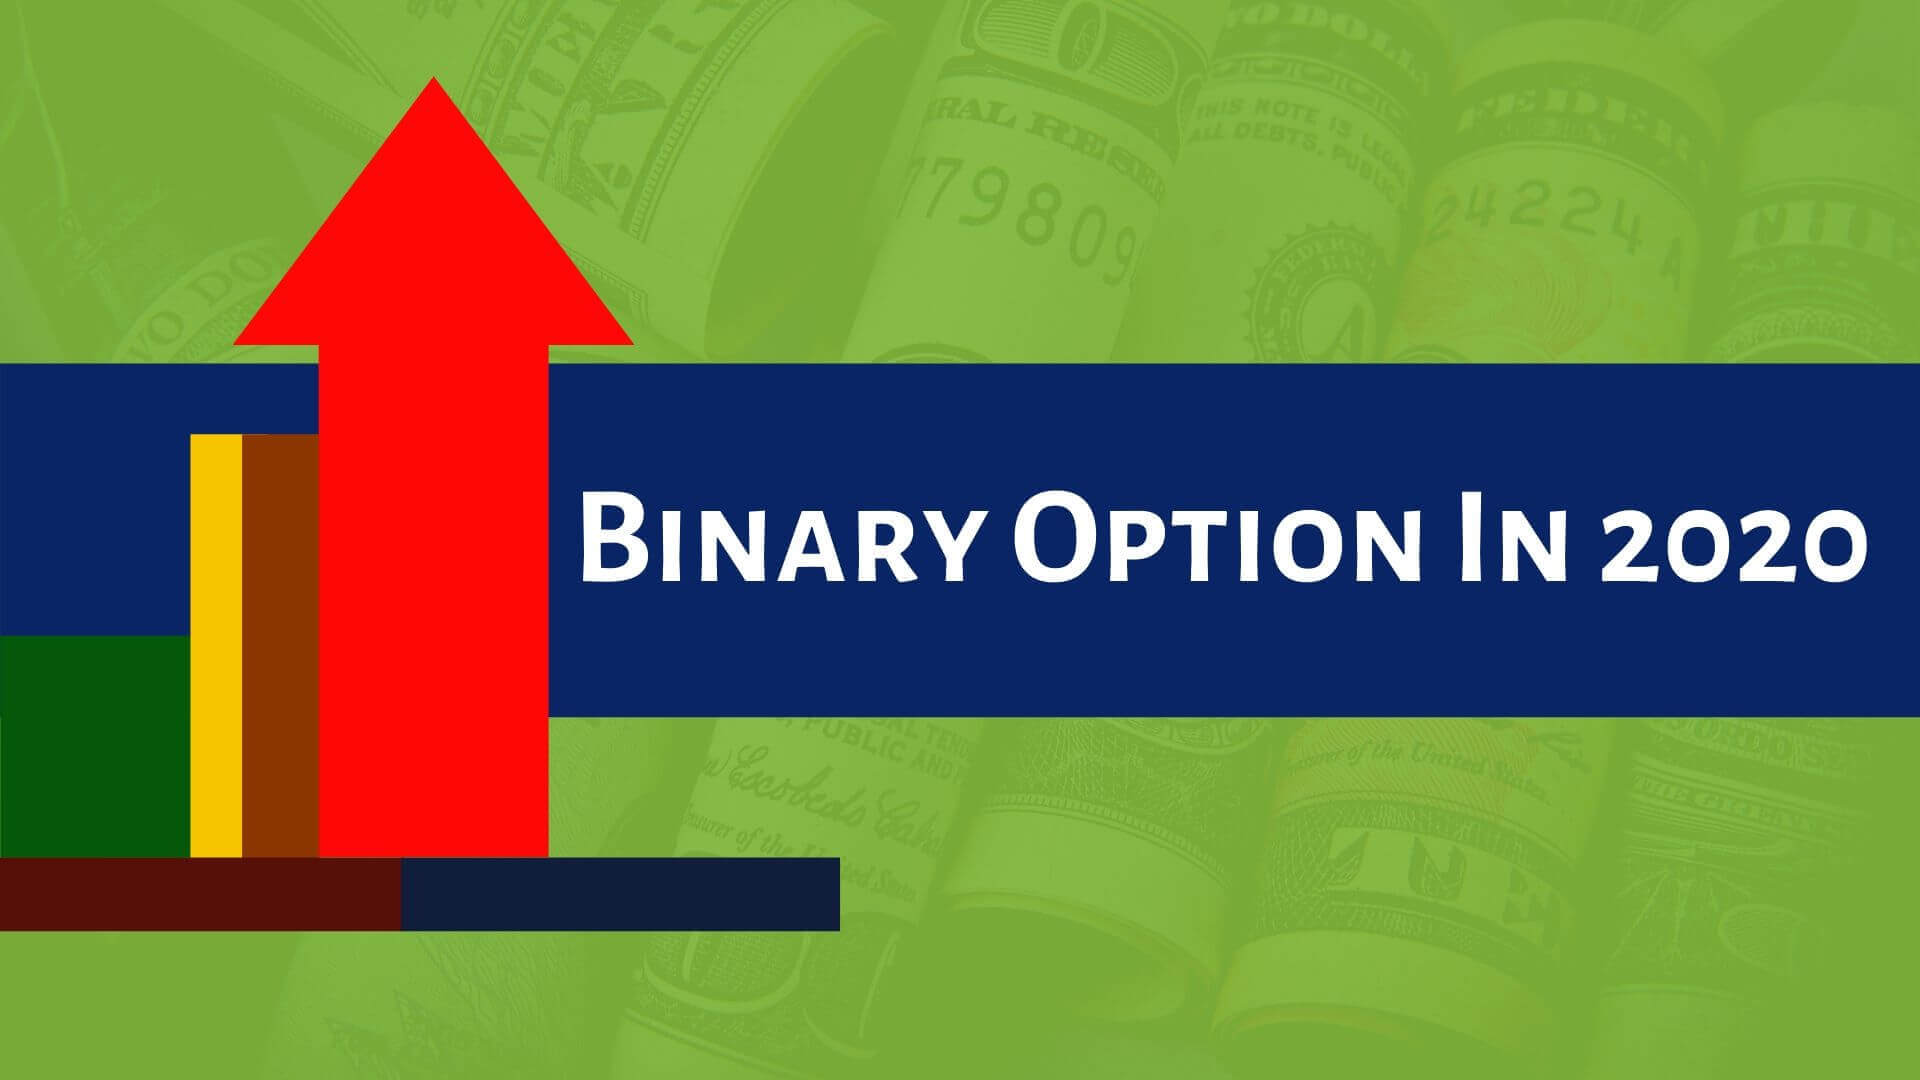 Binary options in 2020